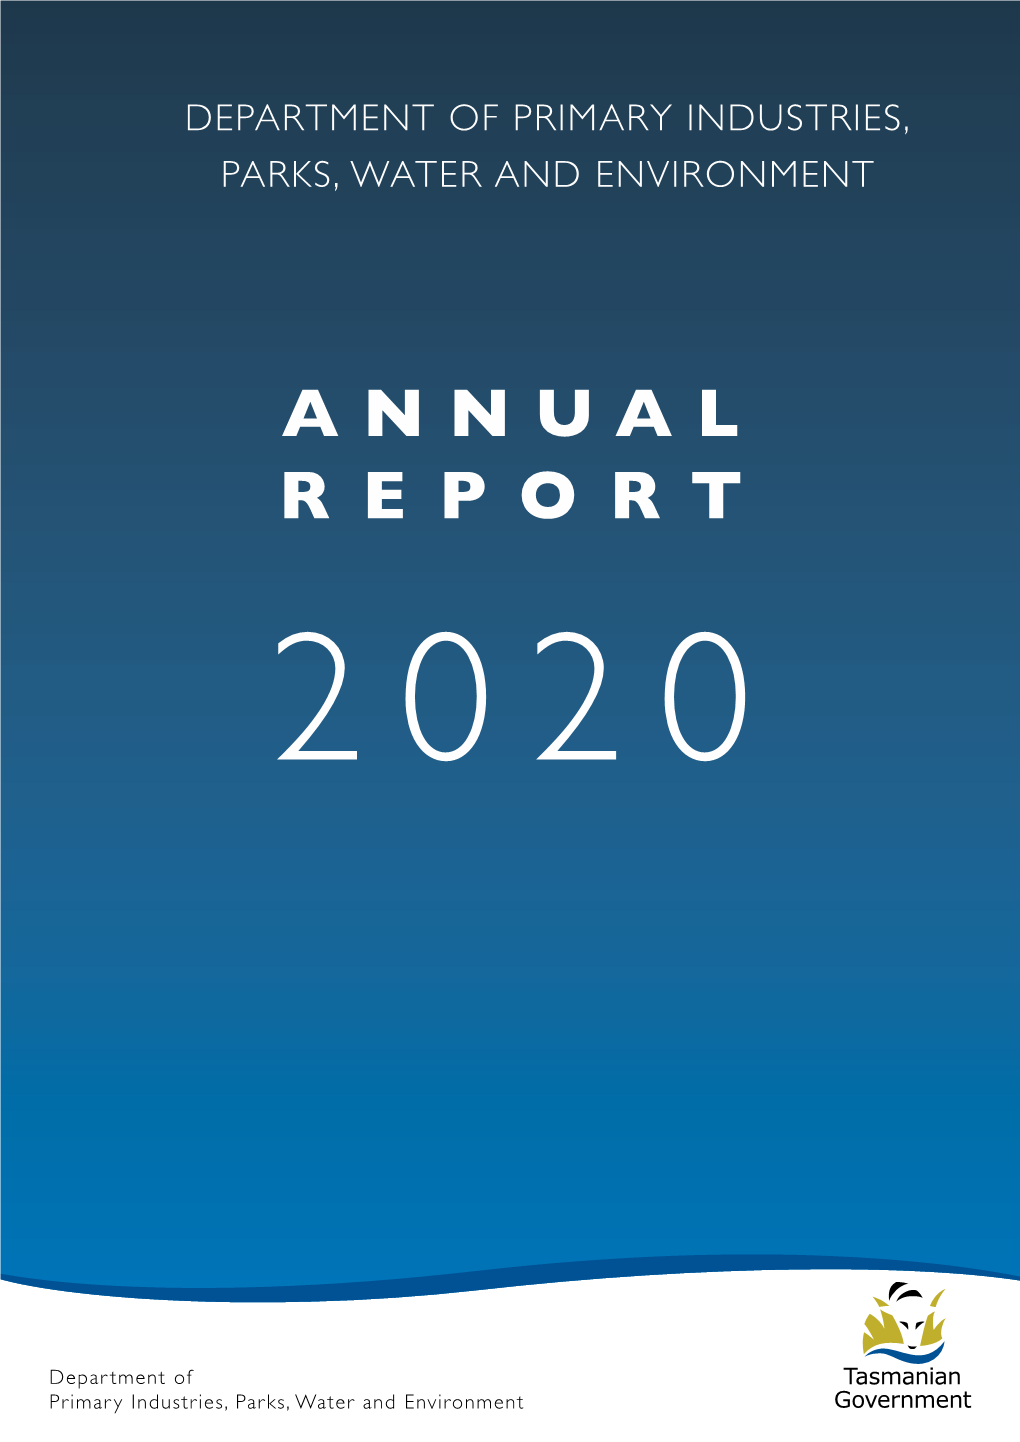 DPIPWE Annual Report 2020